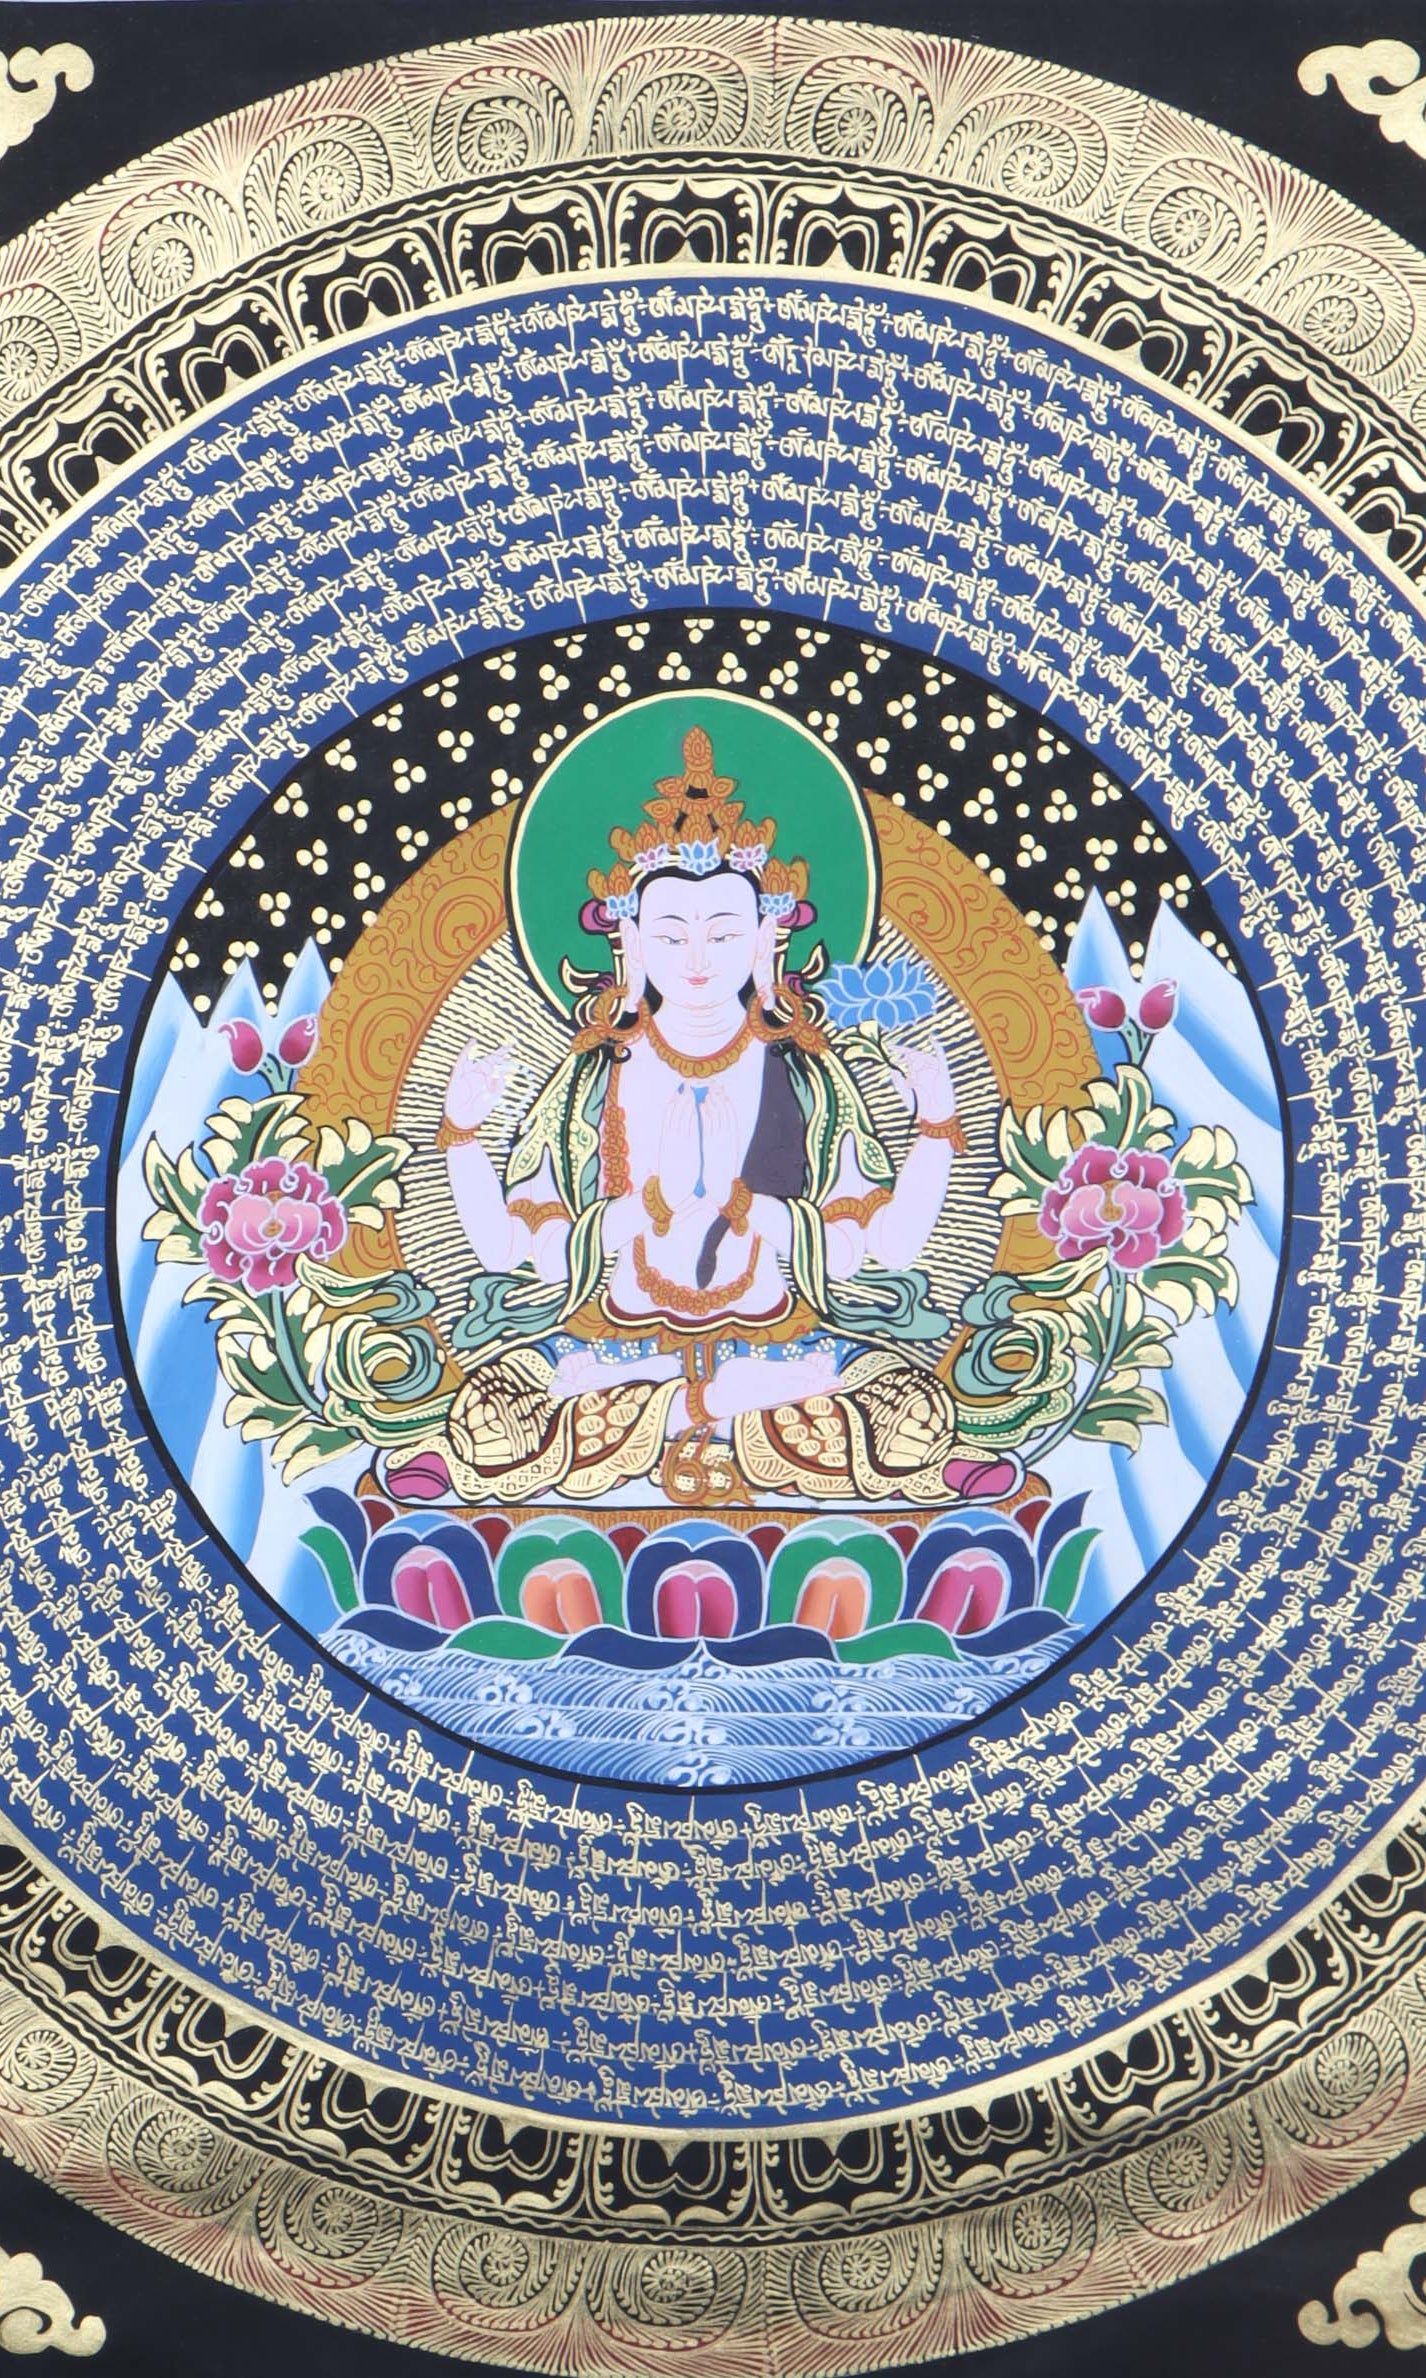 Chengresi Mandala Thangka for meditation, prayer and devotion.